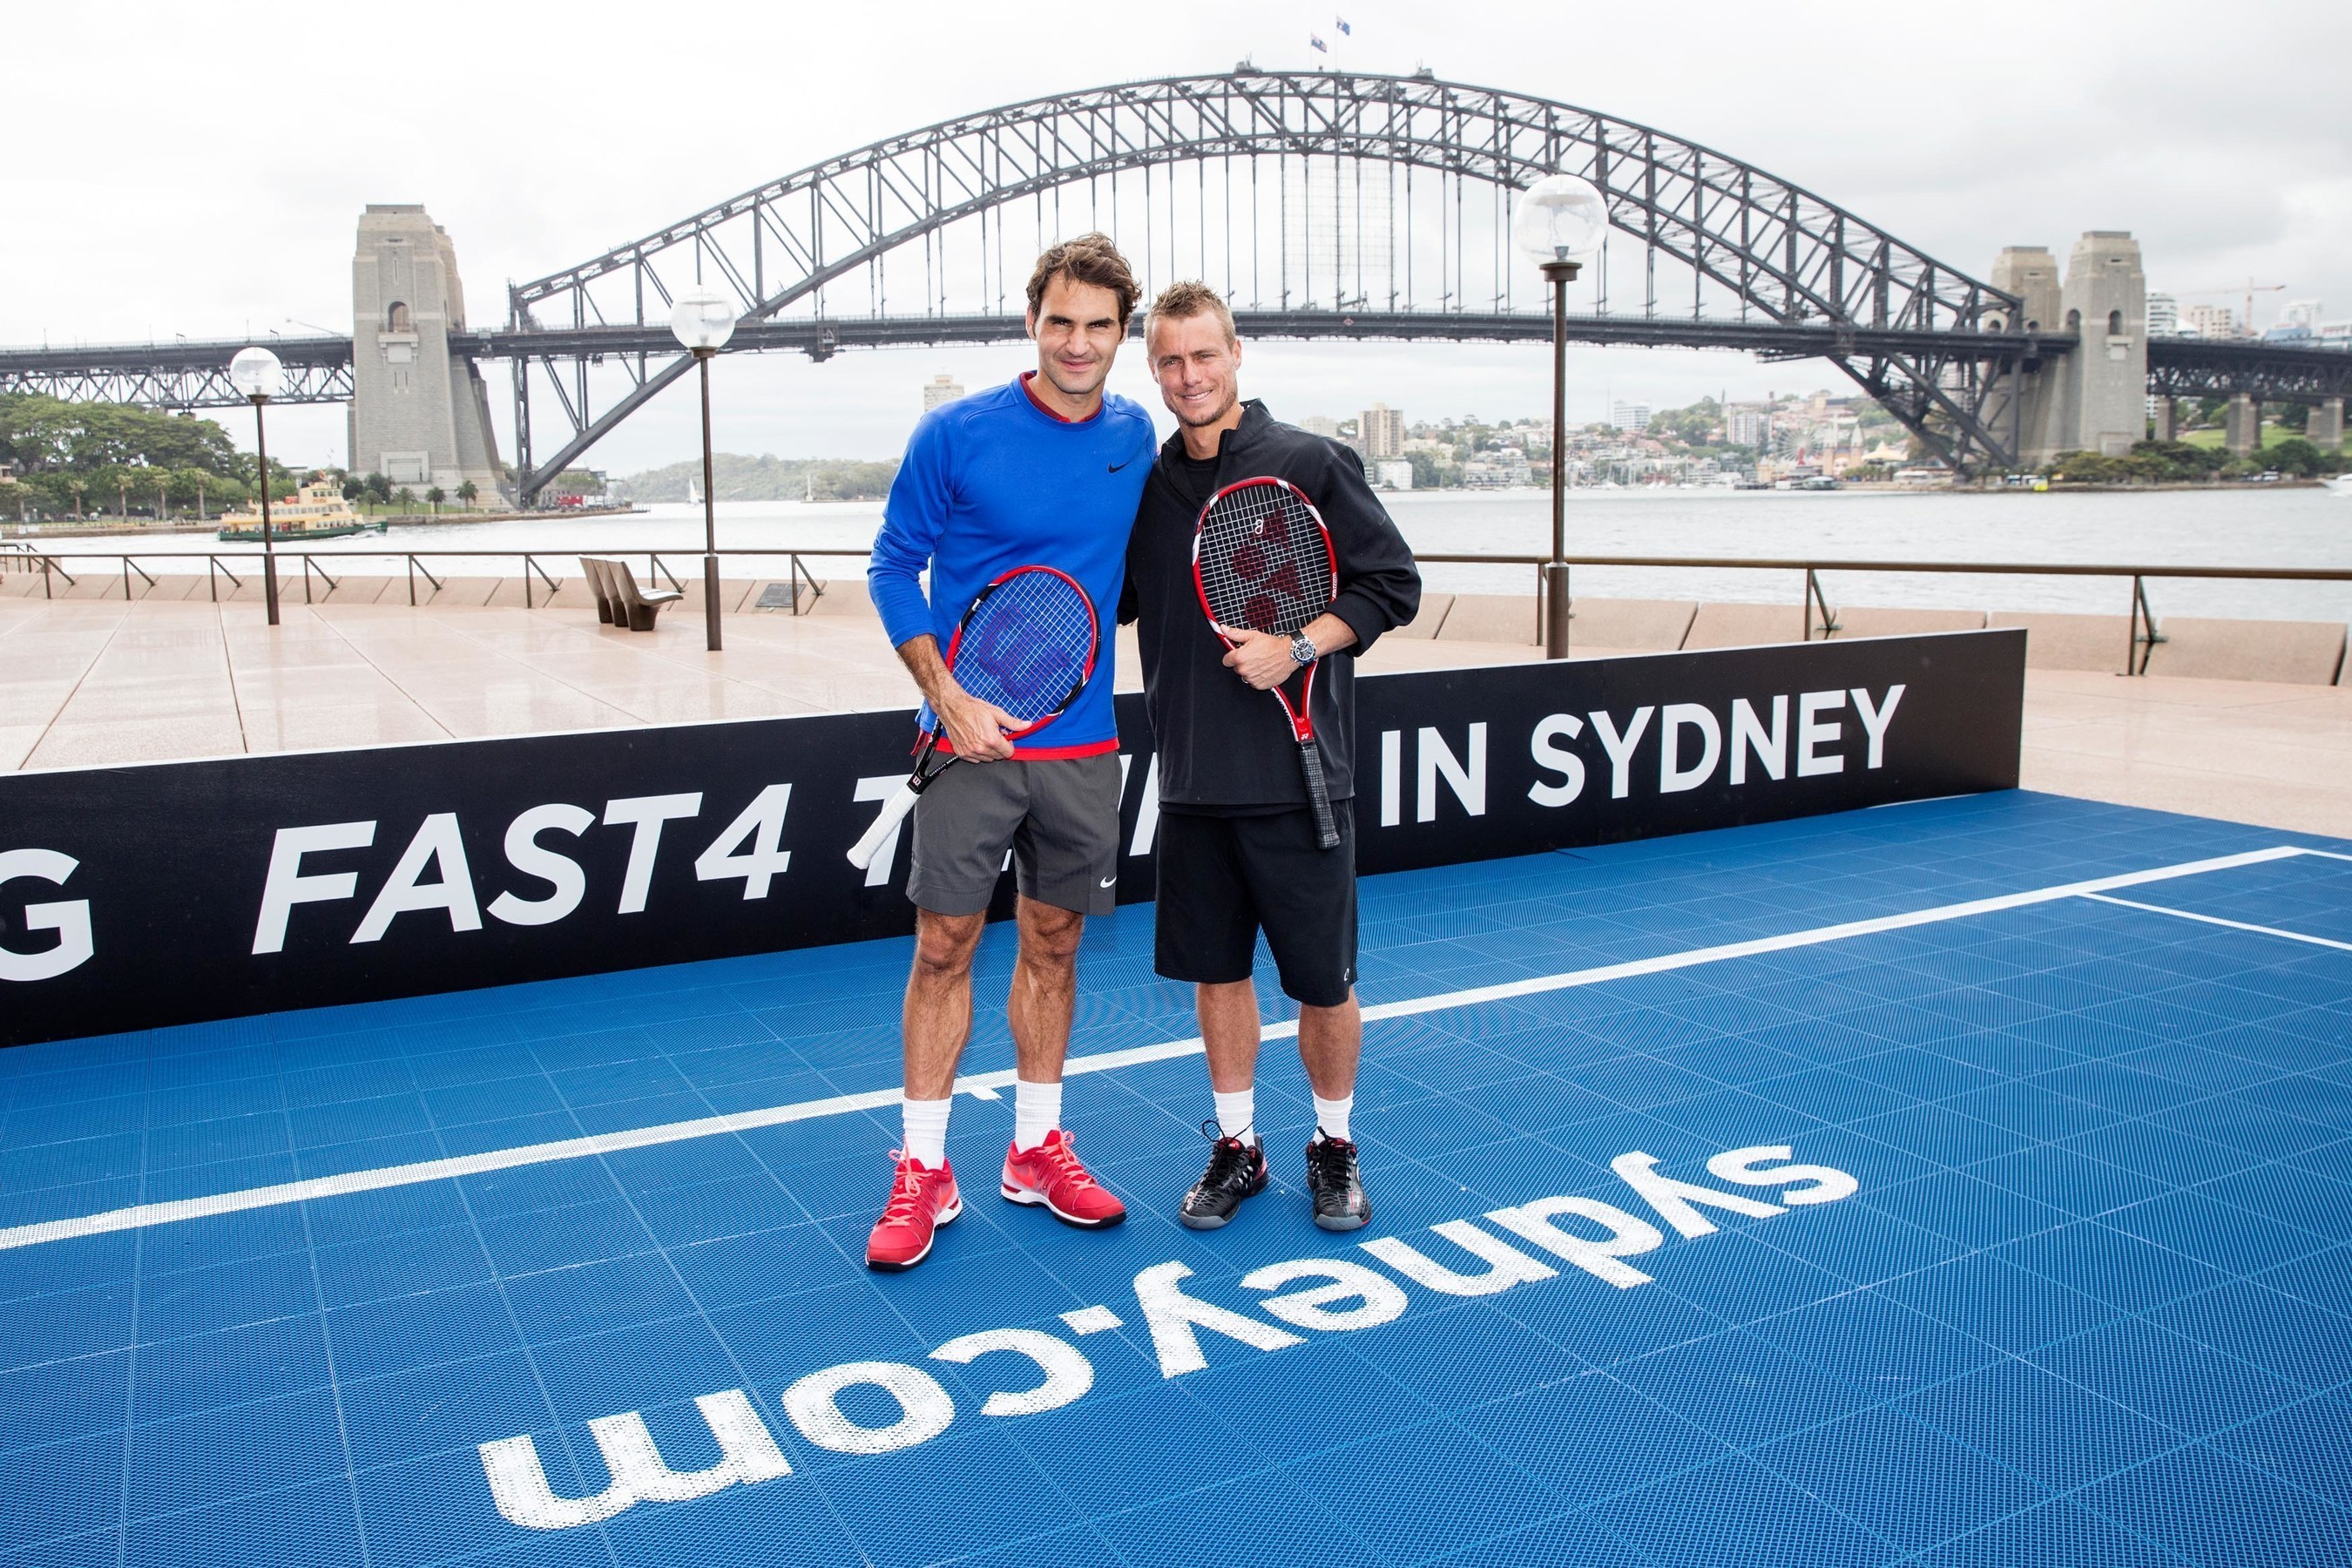 Roger Federer and Lleyton Hewitt challenge each other to FAST4 TENNIS in Sydney. Destination NSW_James Horan